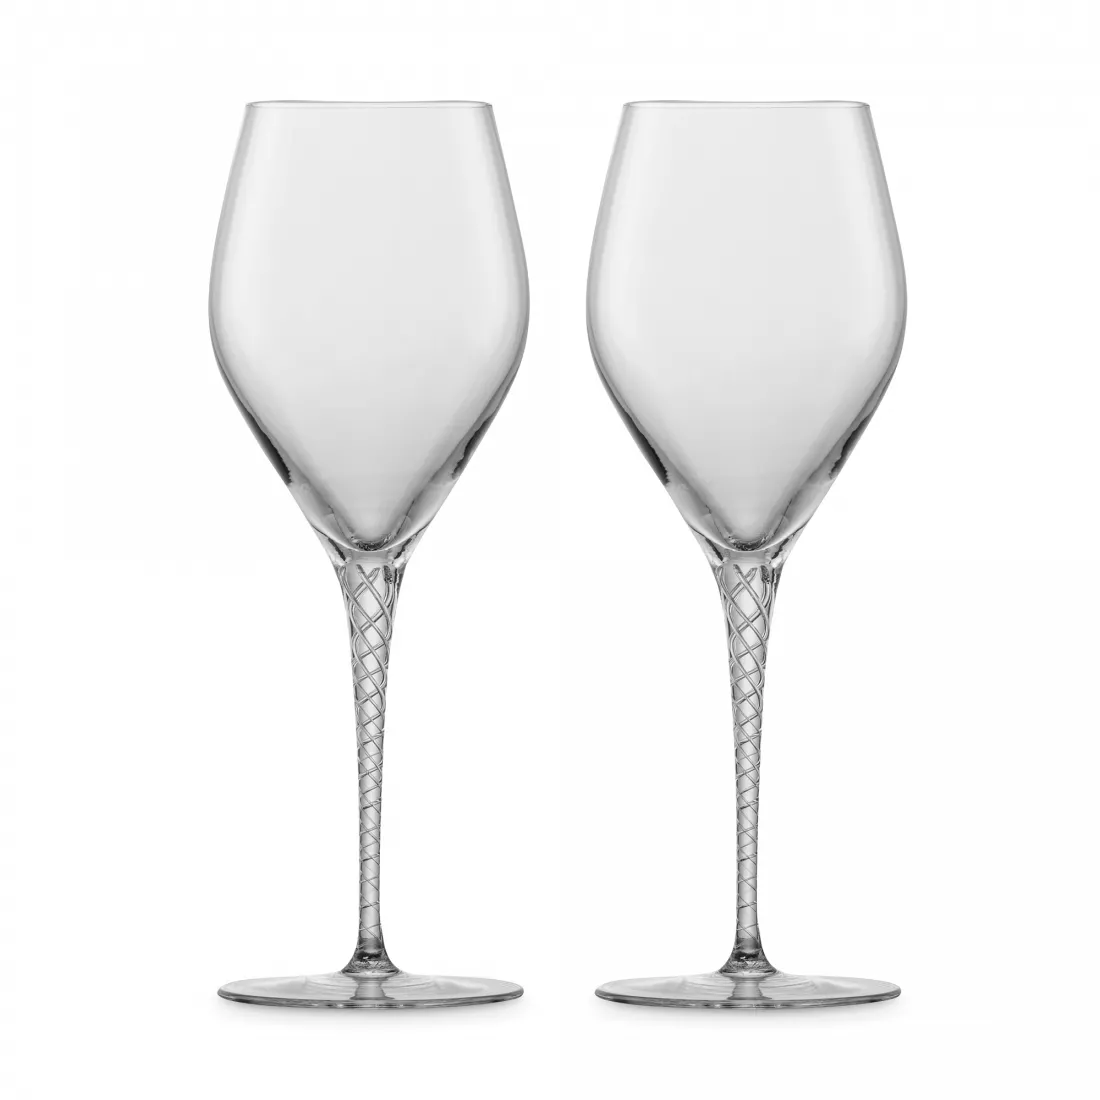 ZWIESEL GLAS Набор бокалов для белого вина, ручная работа, объем 358 мл, 2 шт., серия Spirit